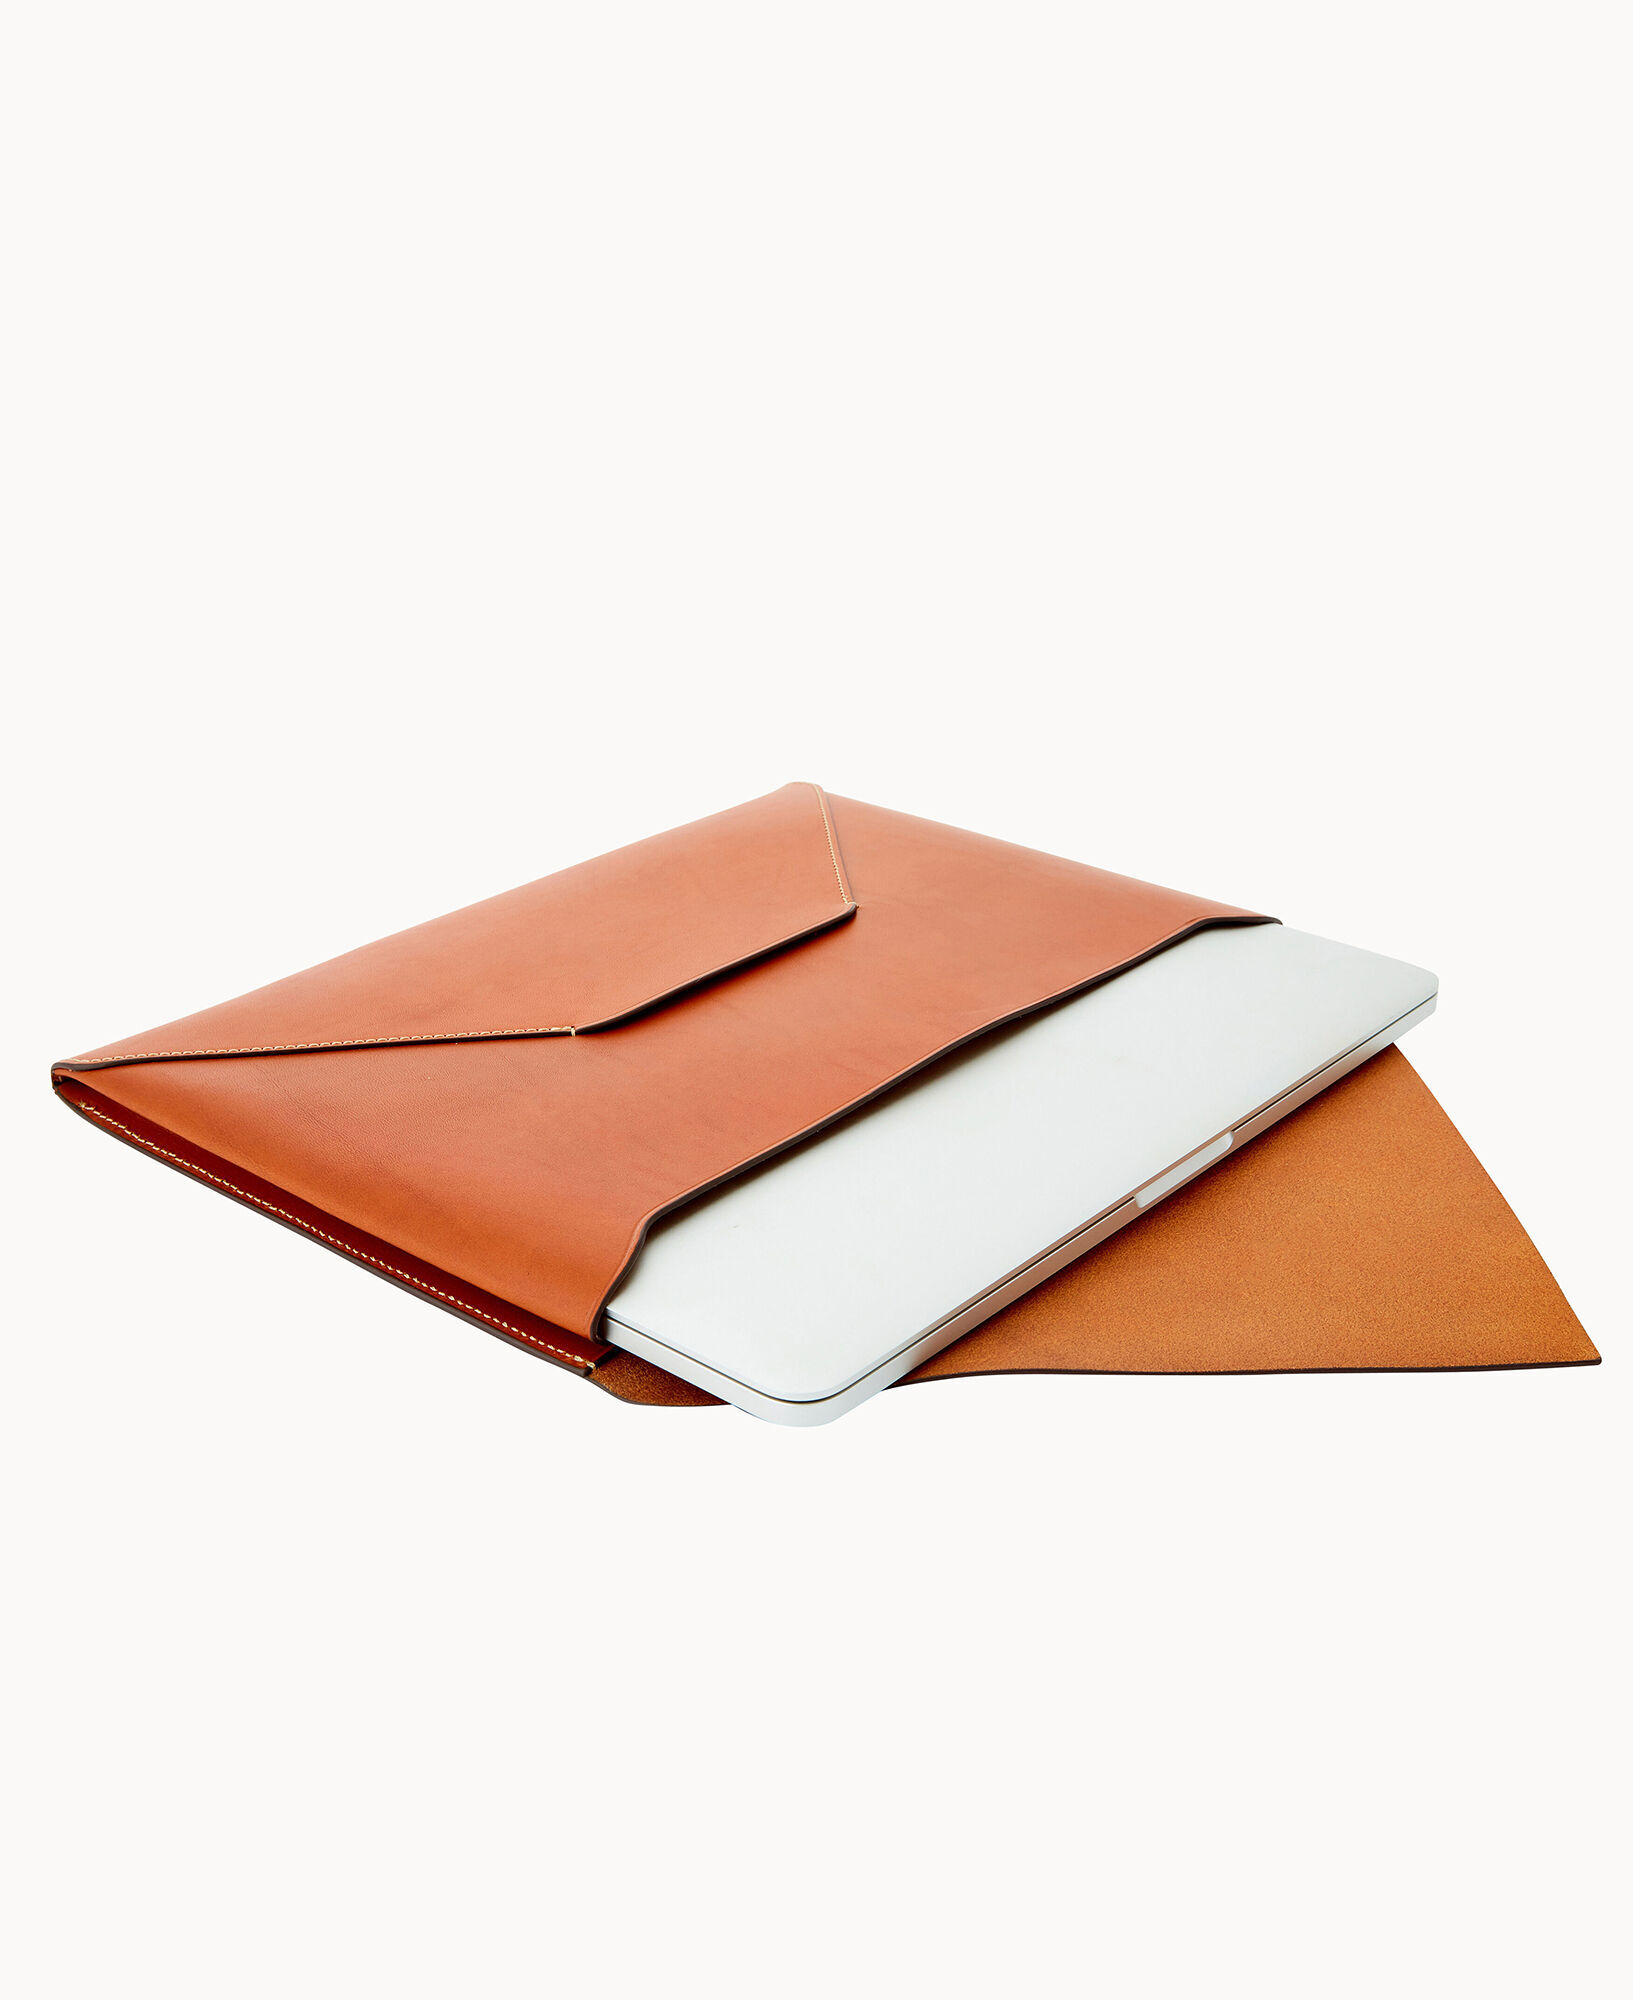 Leather Document Holder Mailing Envelope,Office & Work Resume